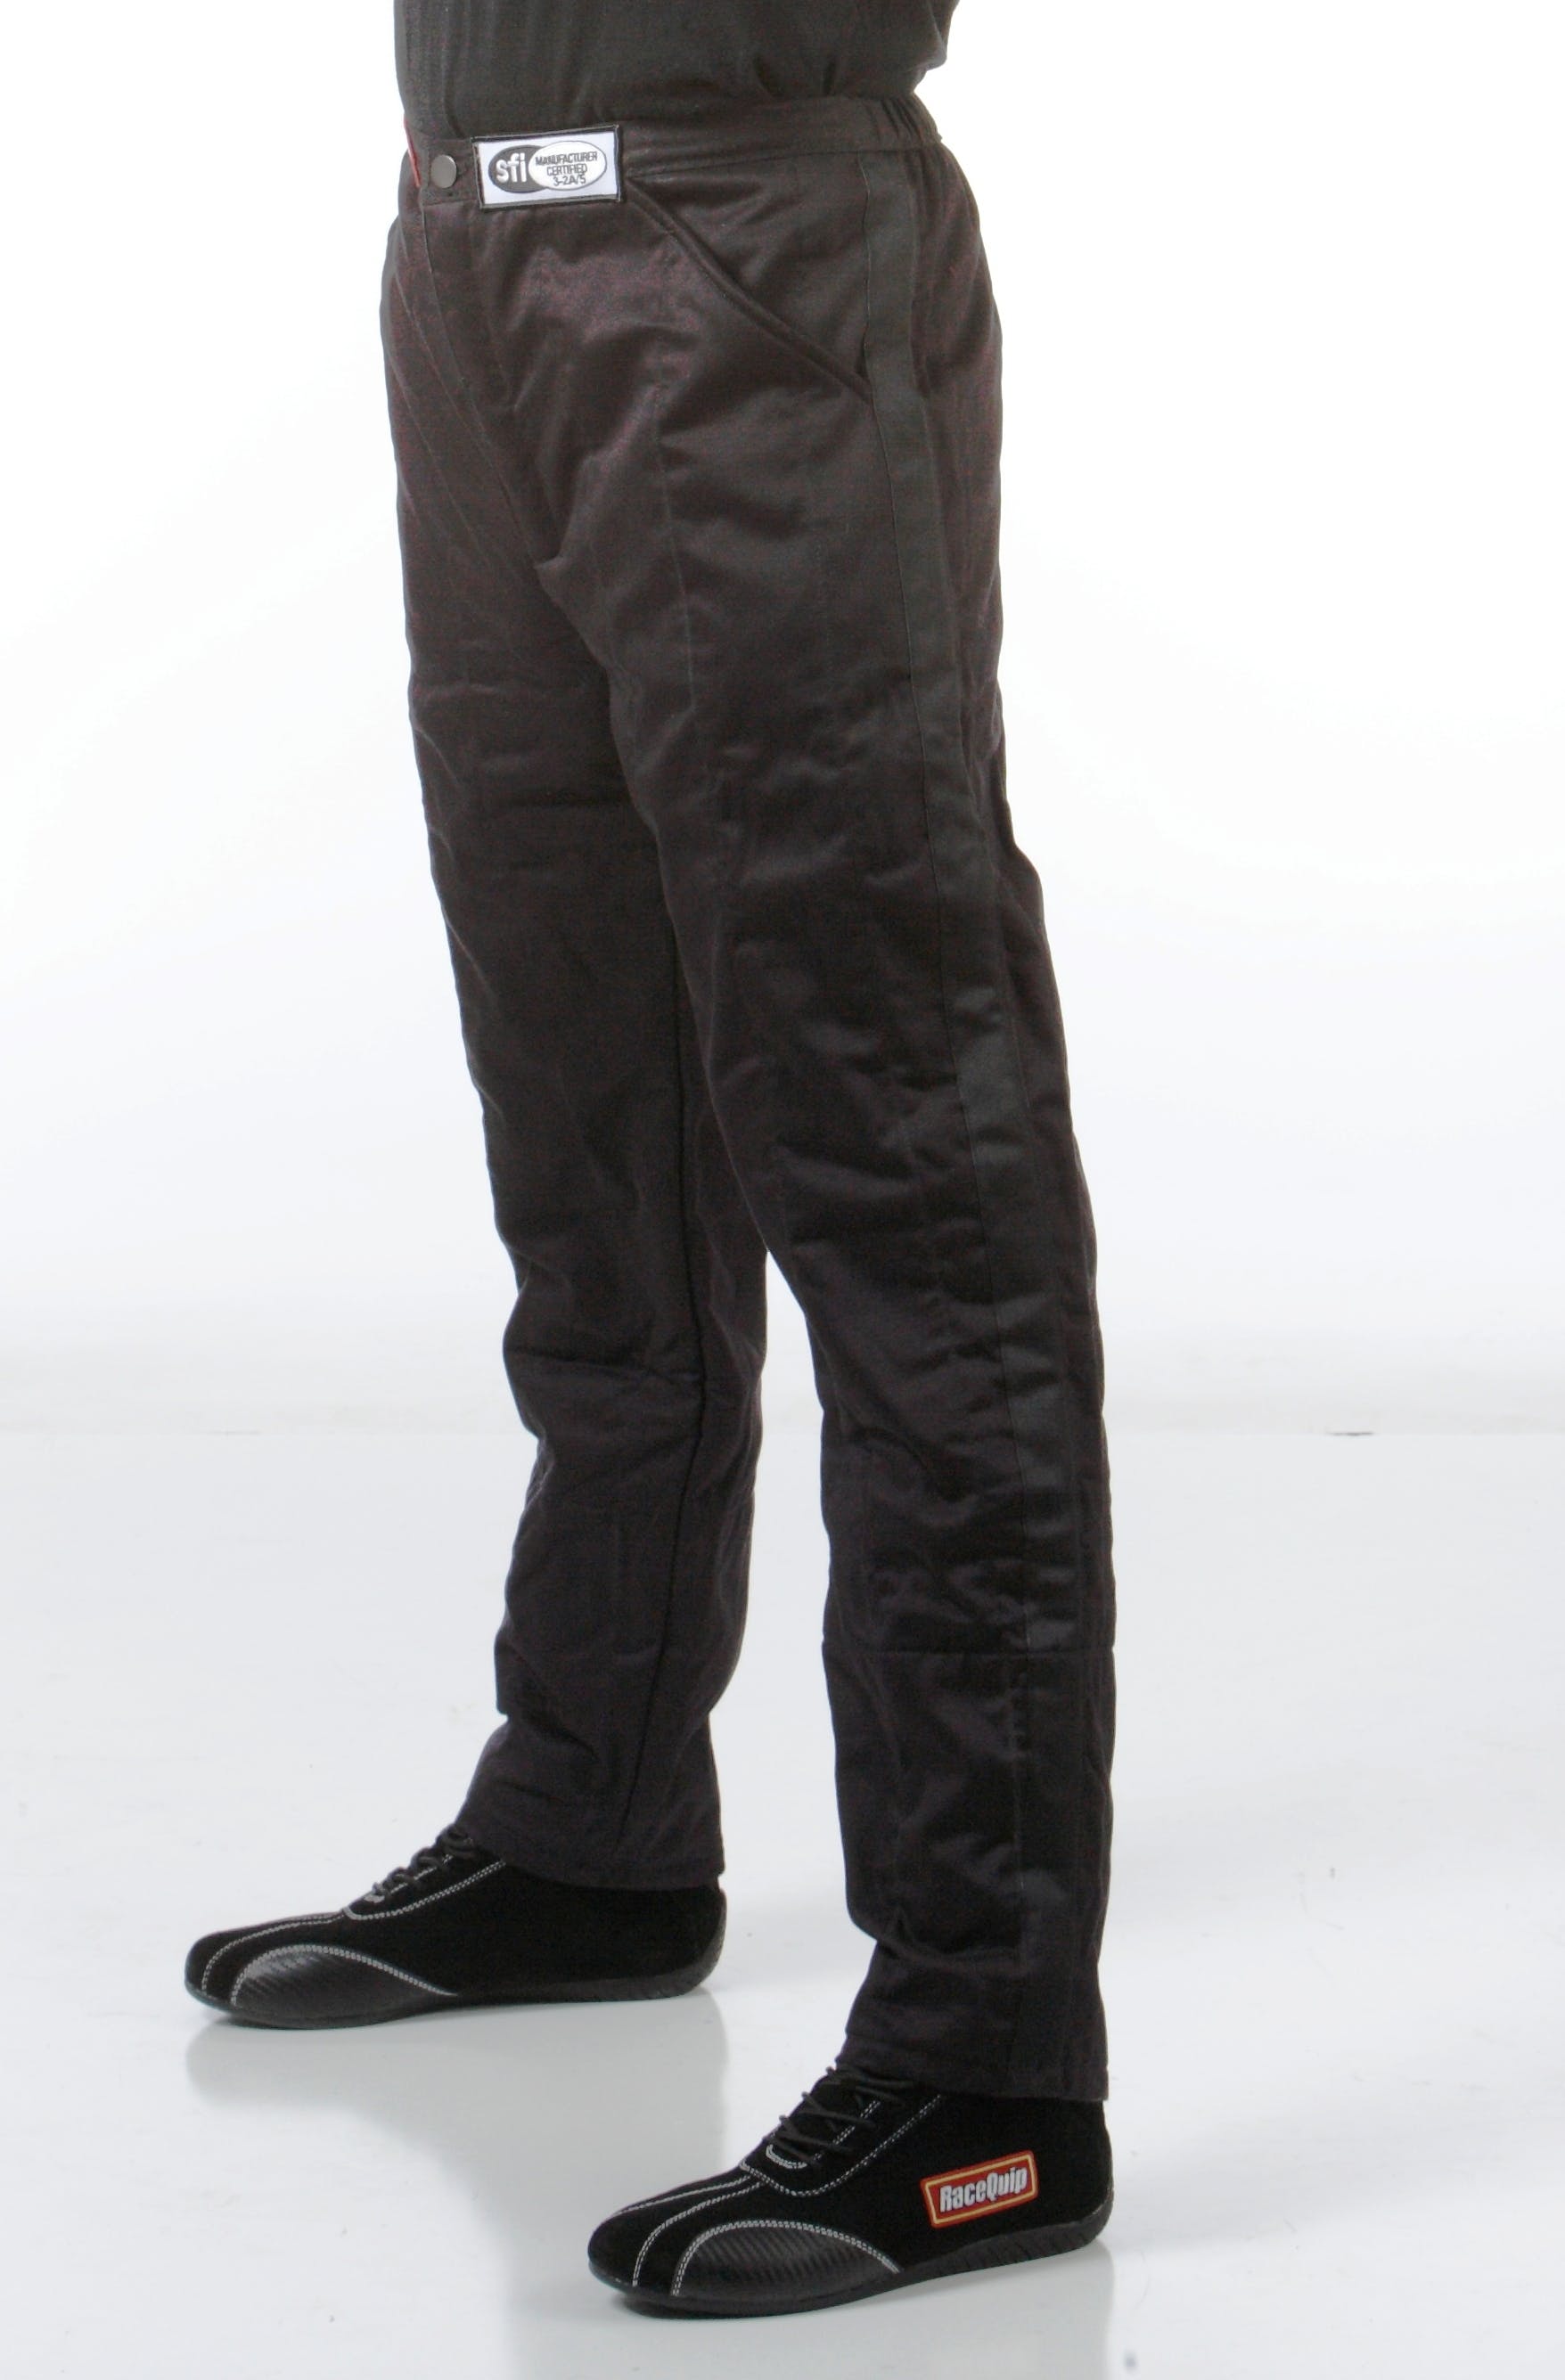 RaceQuip 122000 SFI-5 Pyrovatex Multi-Layer Racing Fire Pants (Black, 5X-Large)